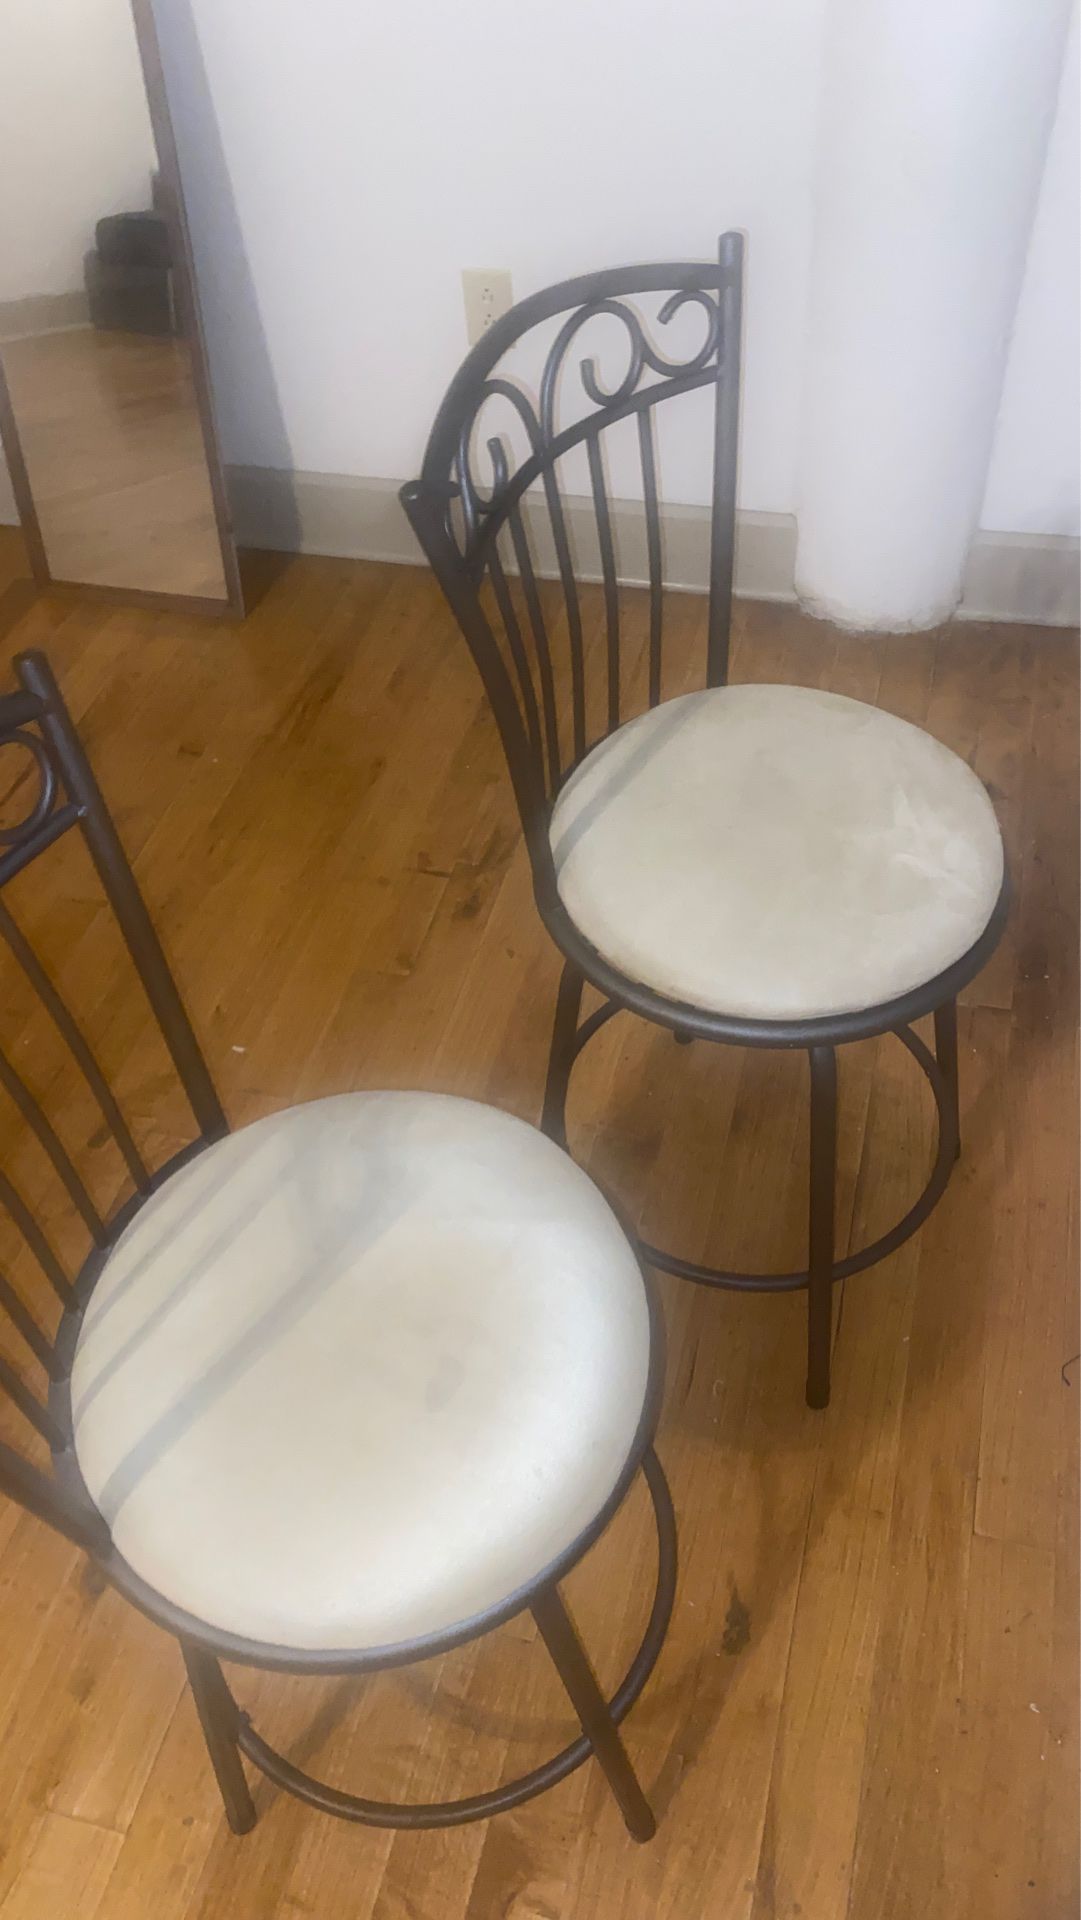 2 bar stool chairs